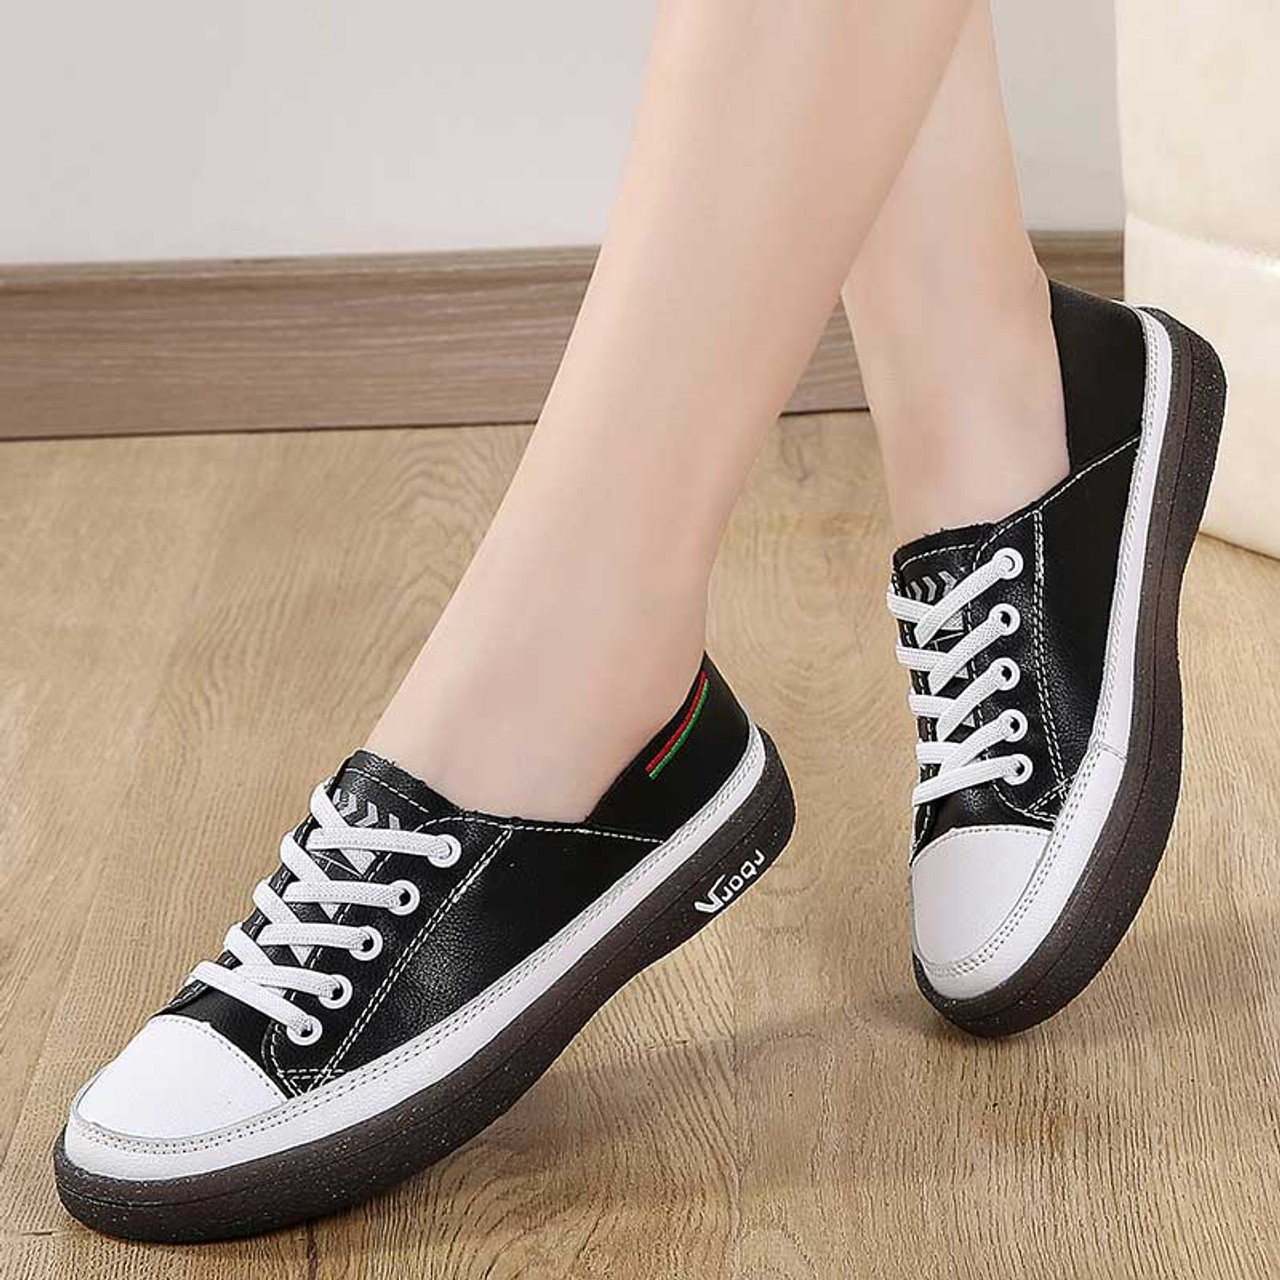 Black thread accent color stripe lace up shoe | Womens lace up shoes ...